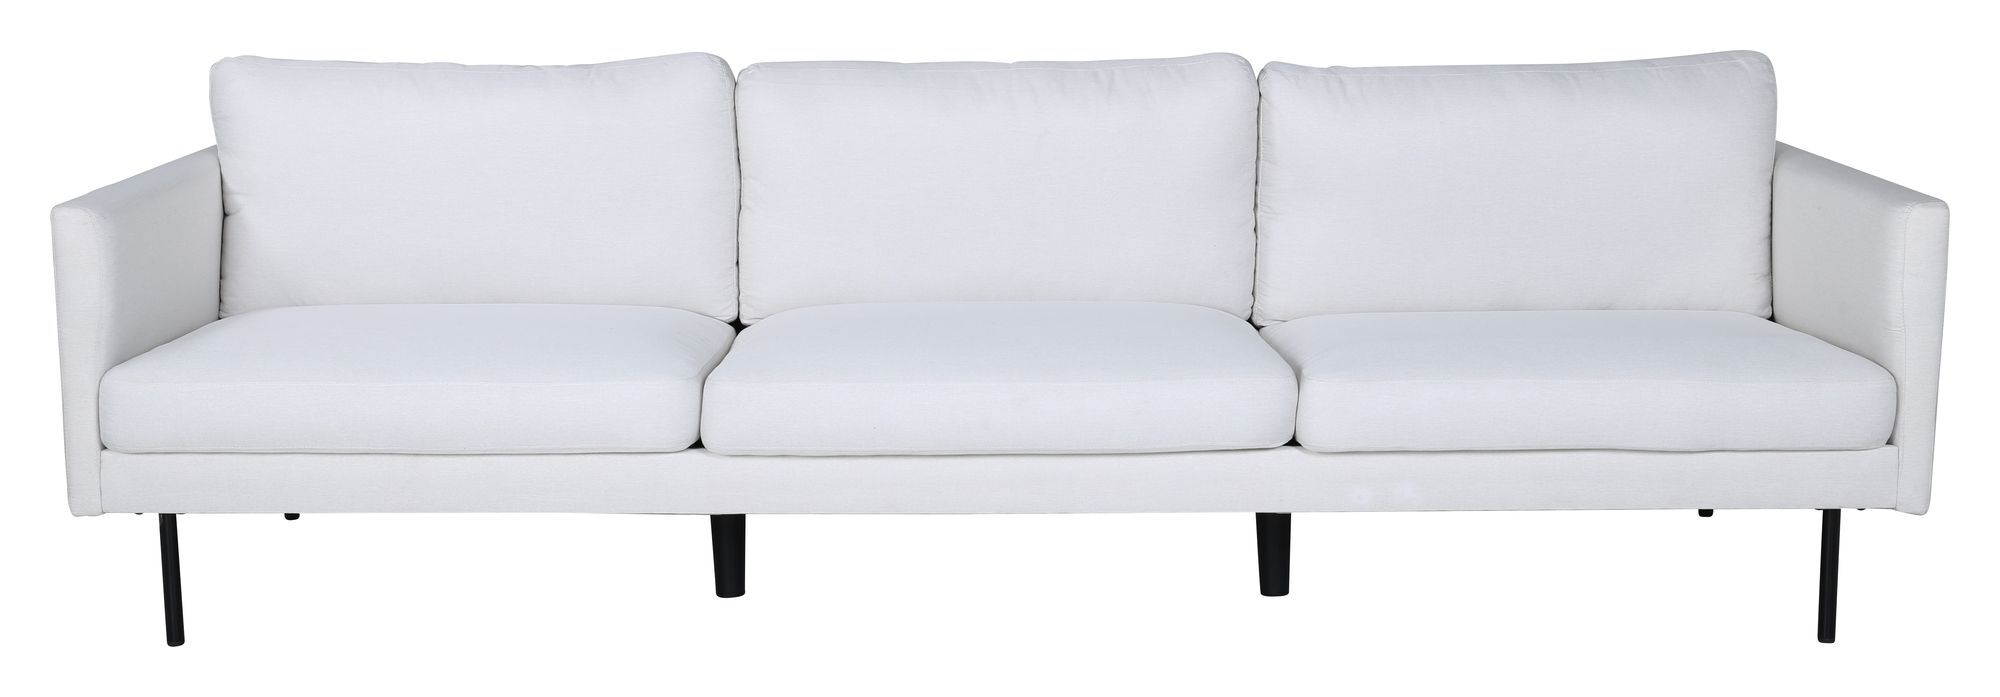 Venture Design Zoom 3-pers. Sofa, Offwhite Stoff   Unoliving